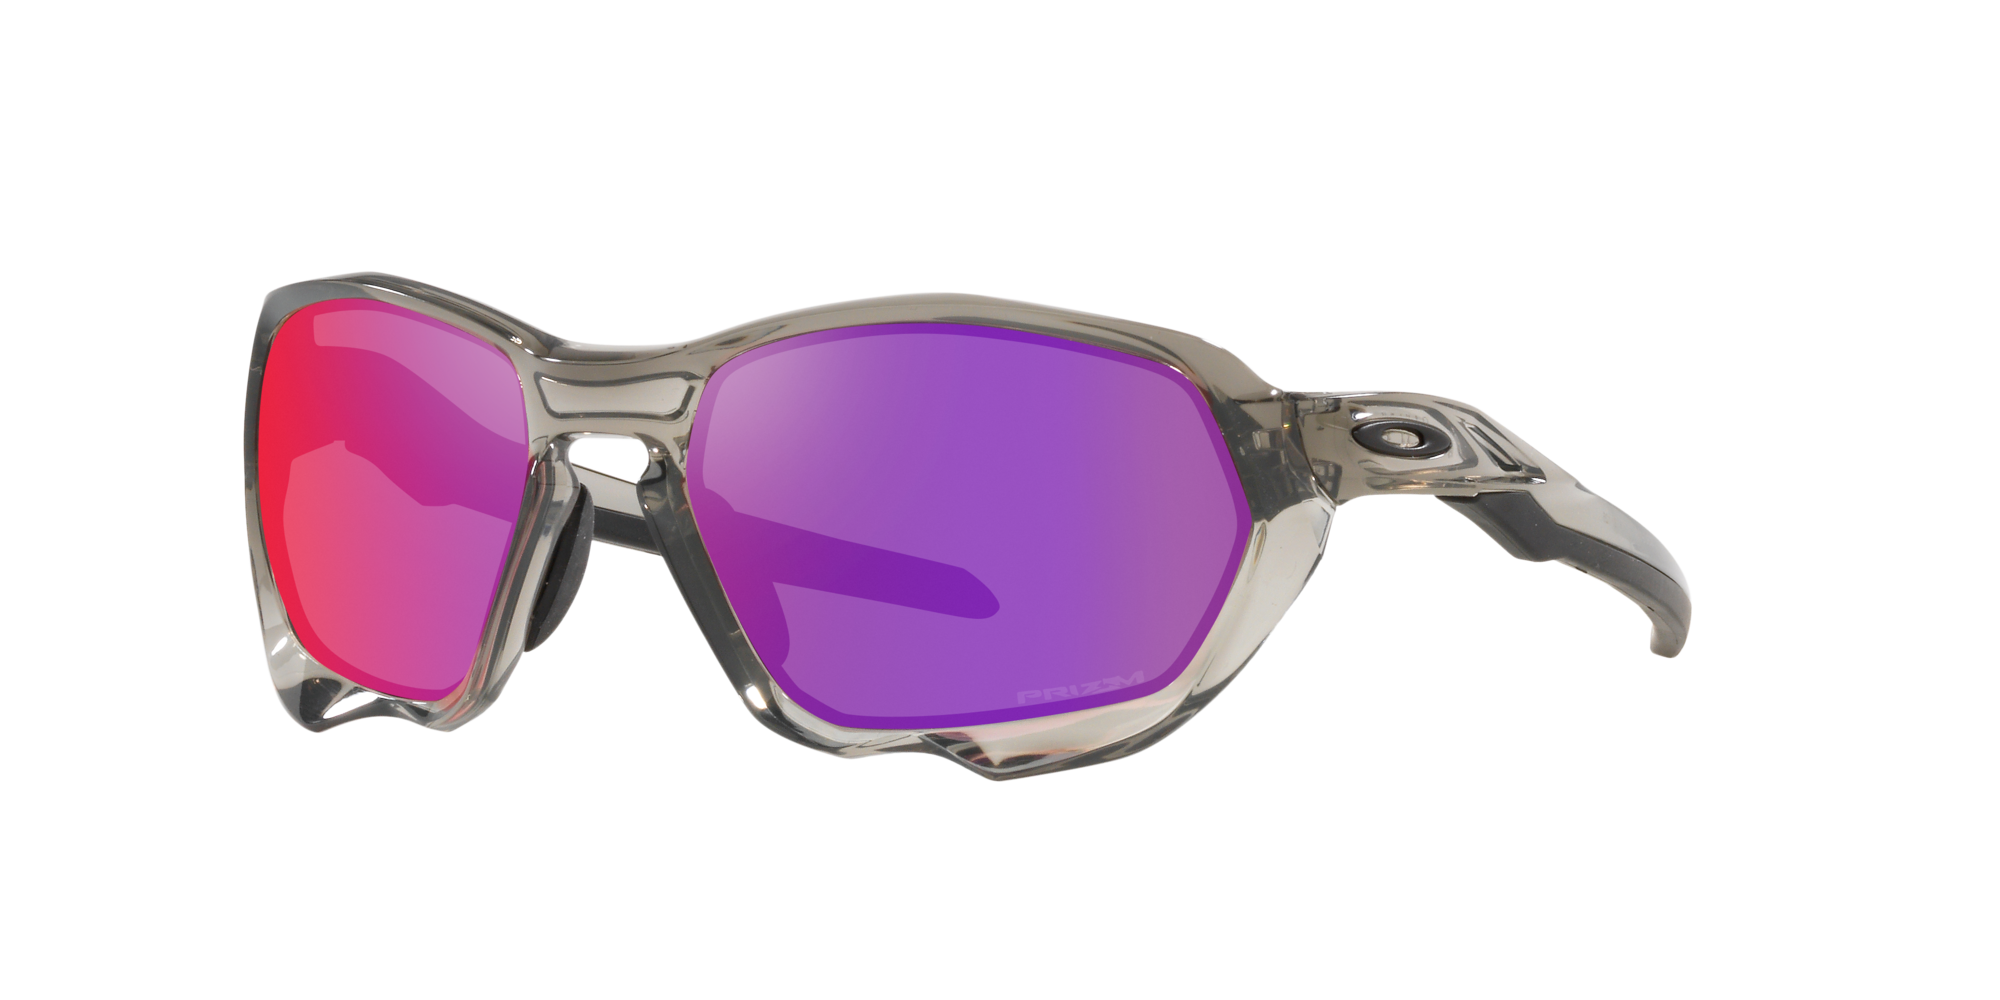 Do you know any high-quality Oakley sunglasses for men?| KoalaEye Opti